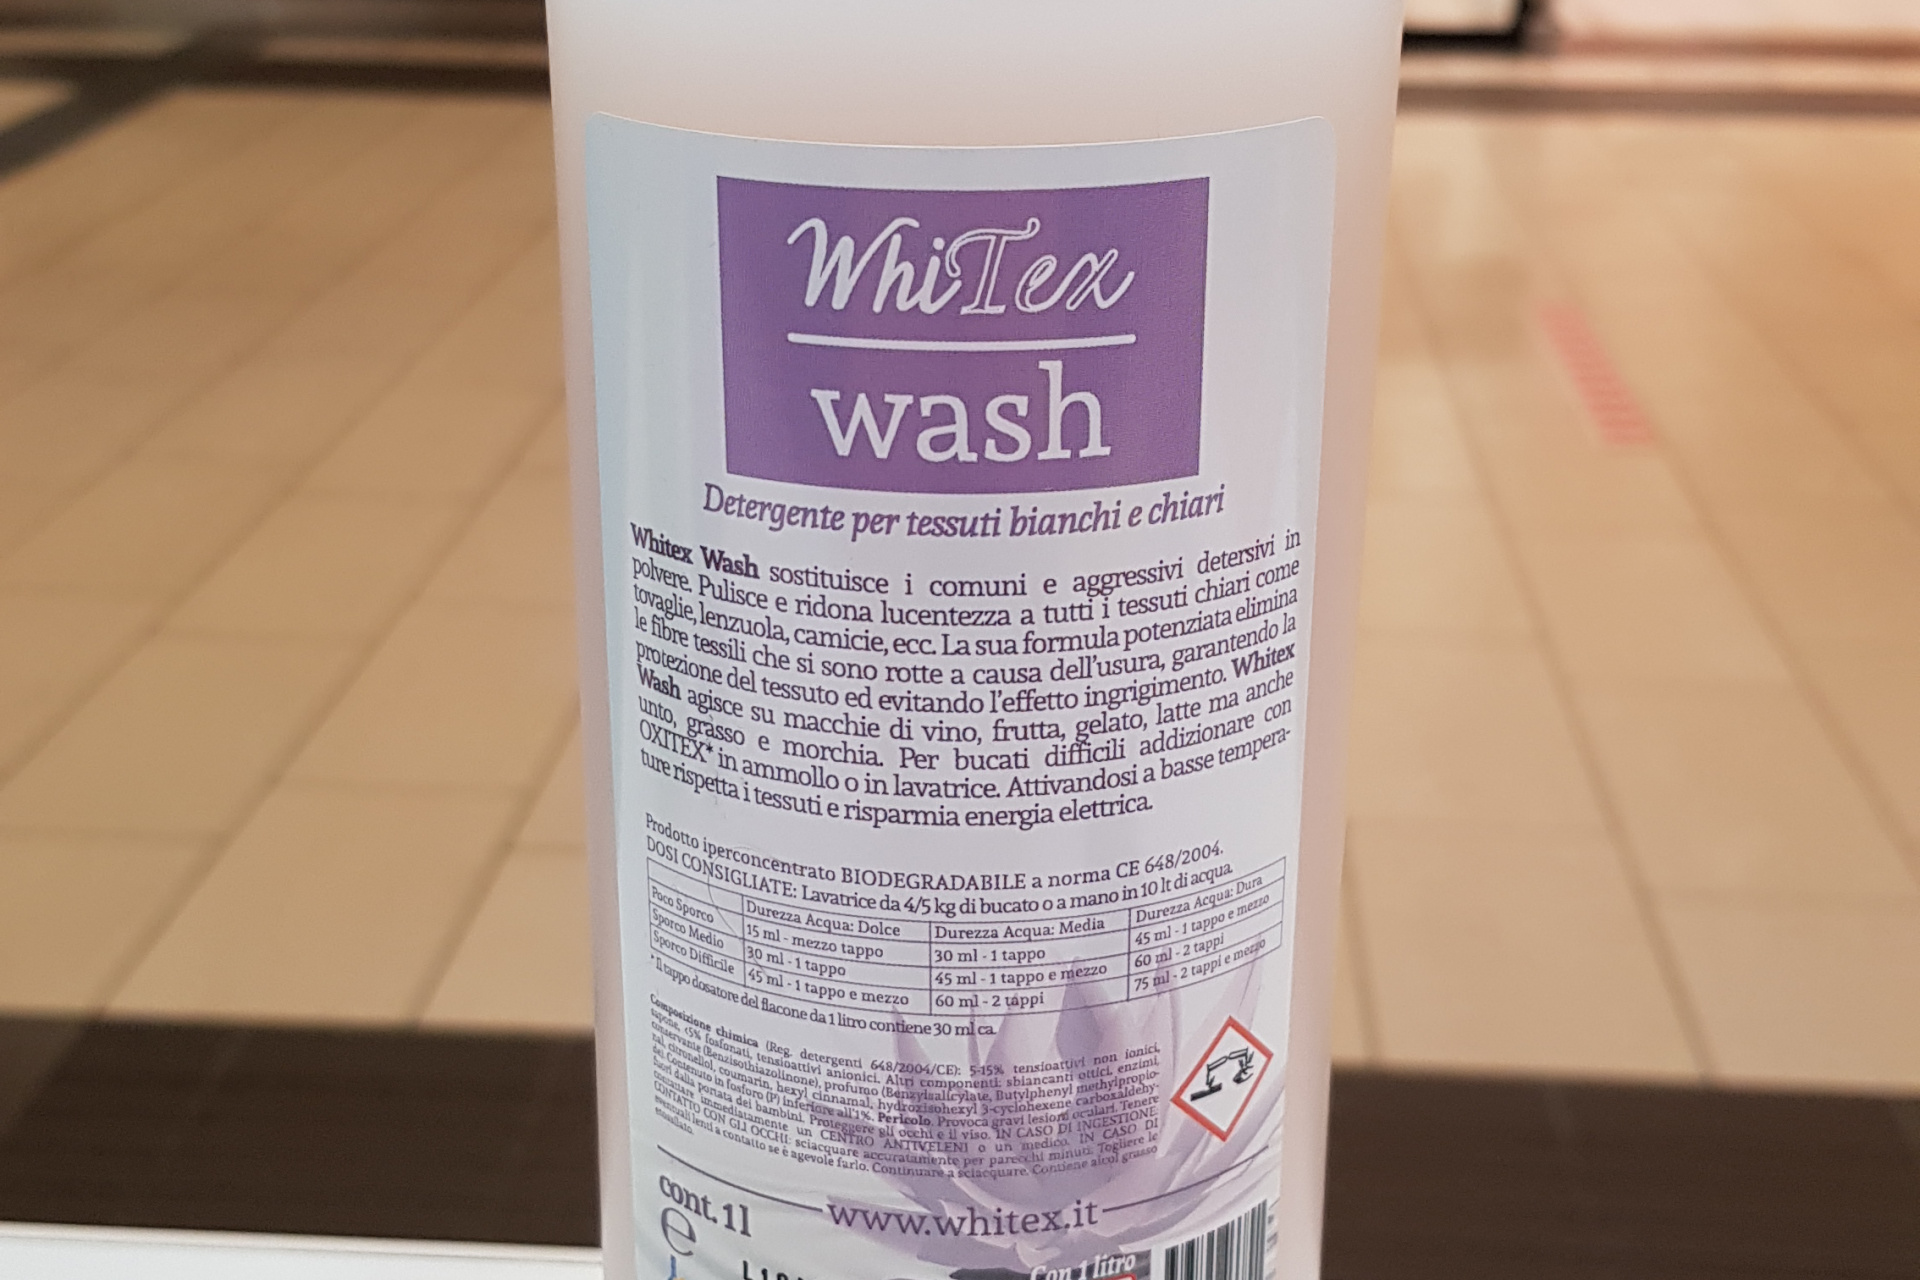   Whitex     Wash  